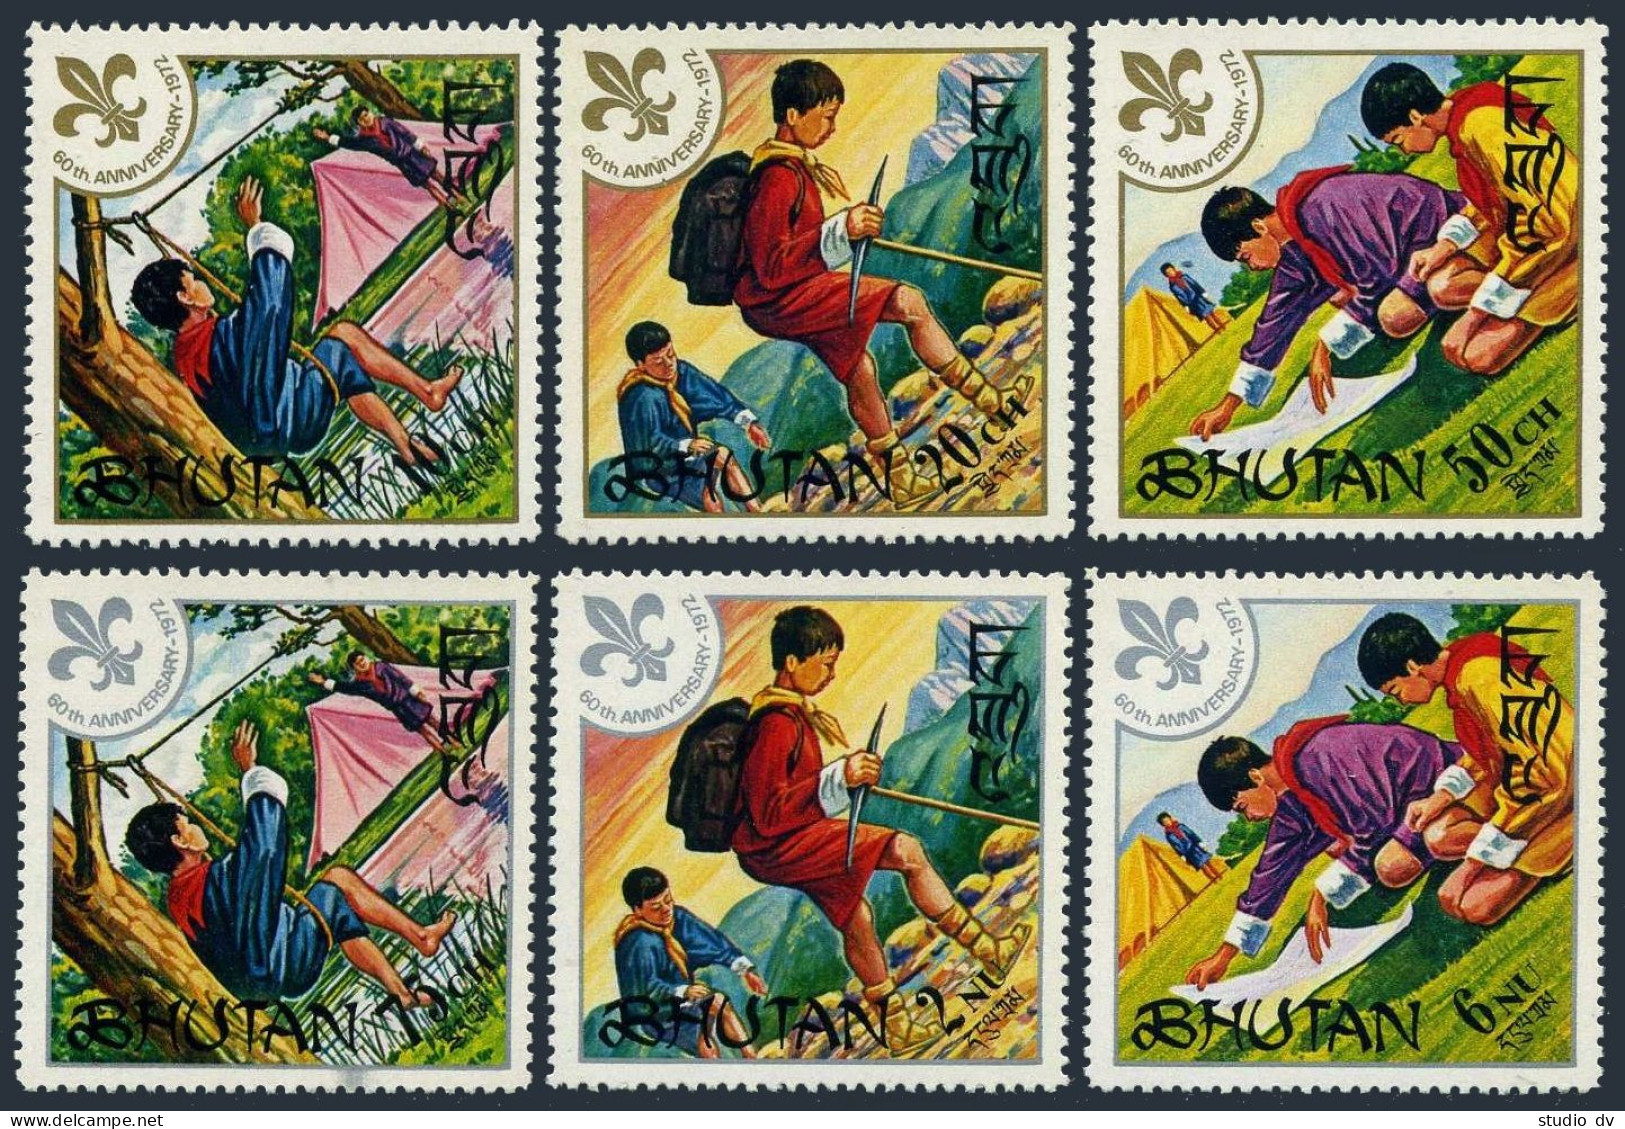 Bhutan 134-139,139a,MNH.Michel 480-485,Bl.47A. Boy Scouts,60th Ann.1972. - Bhutan